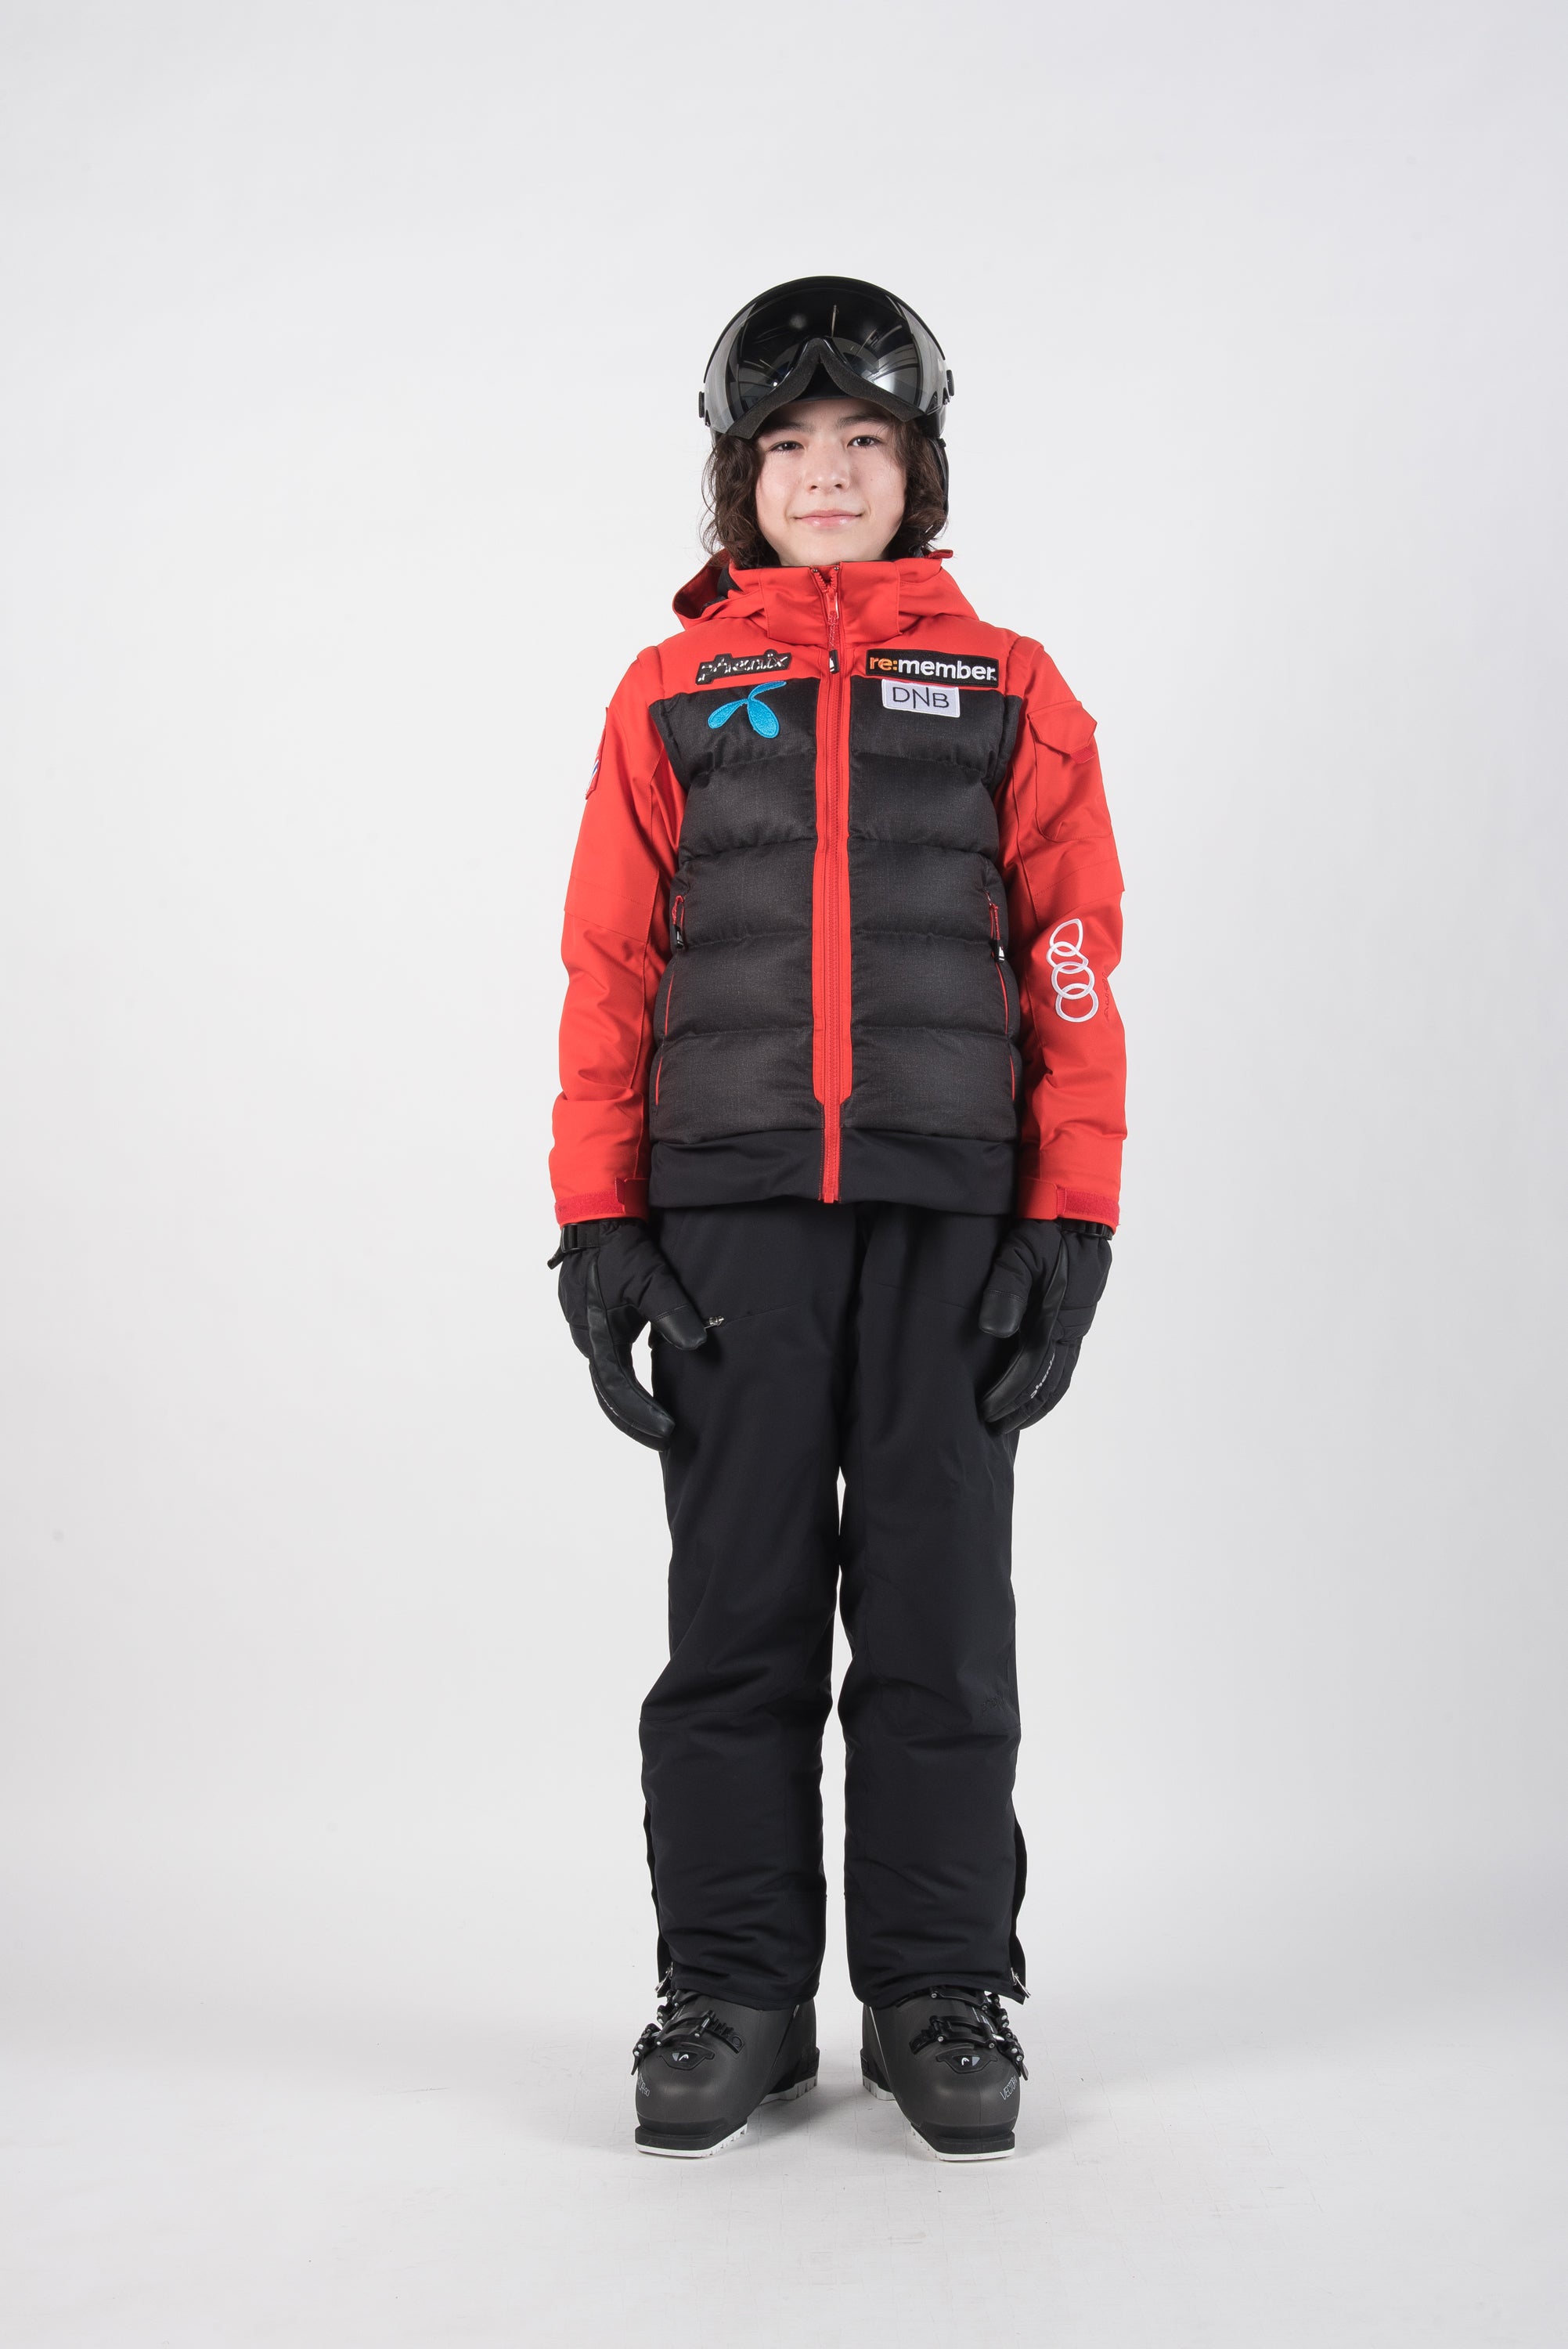 Phenix Boy's Norway Team Jacket 2022 - The Startingate